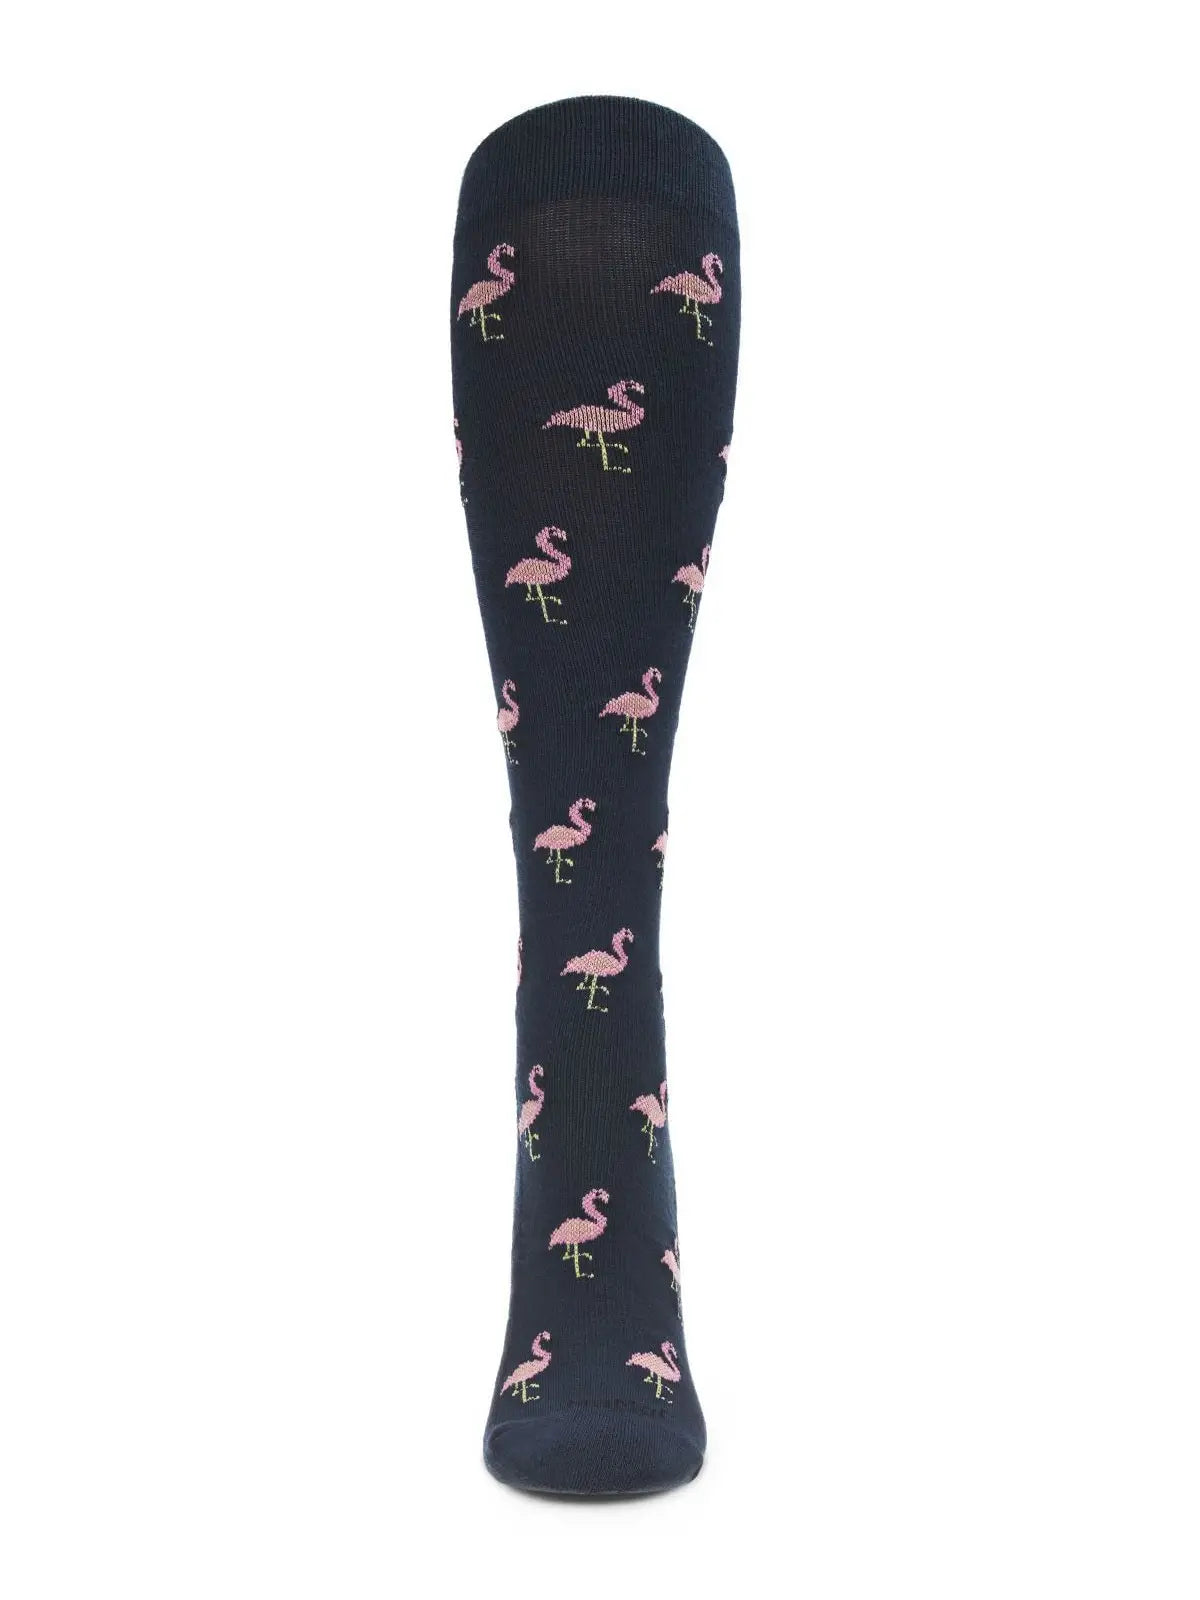 Fancy Flamingo Women's Bamboo Compression Socks - The Sockery